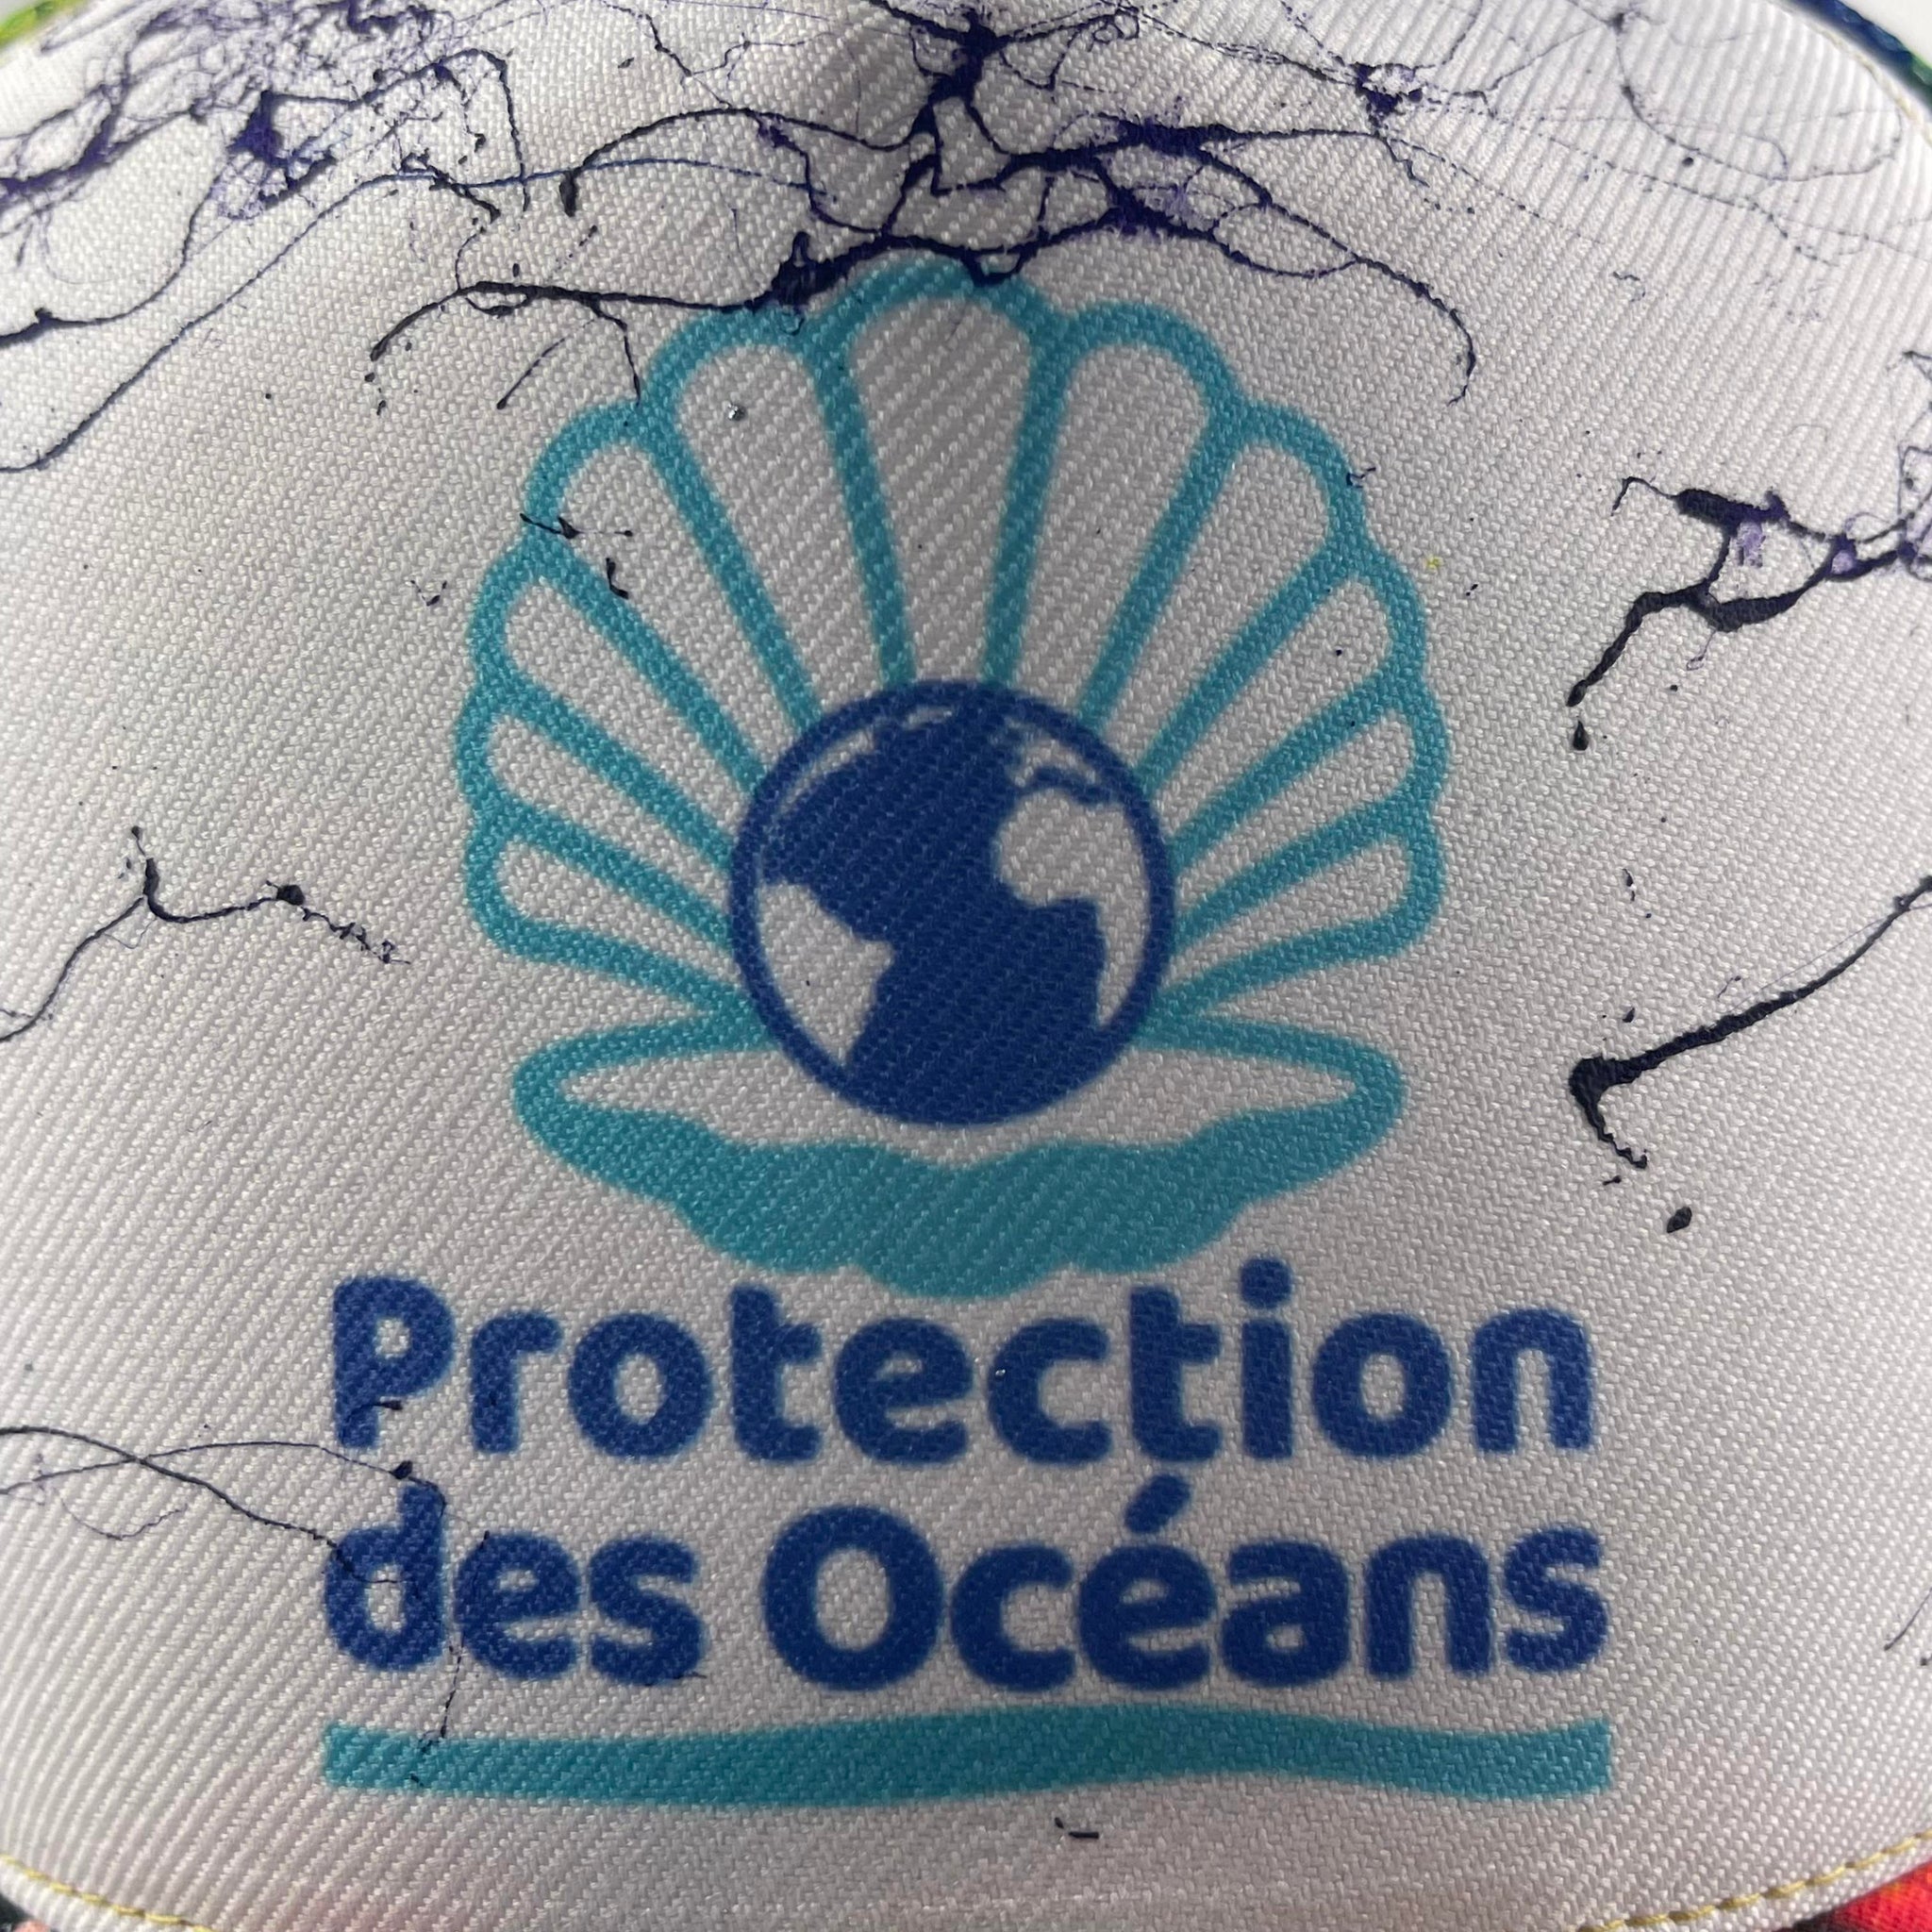 Protection des Océans x MAKAÏ 02